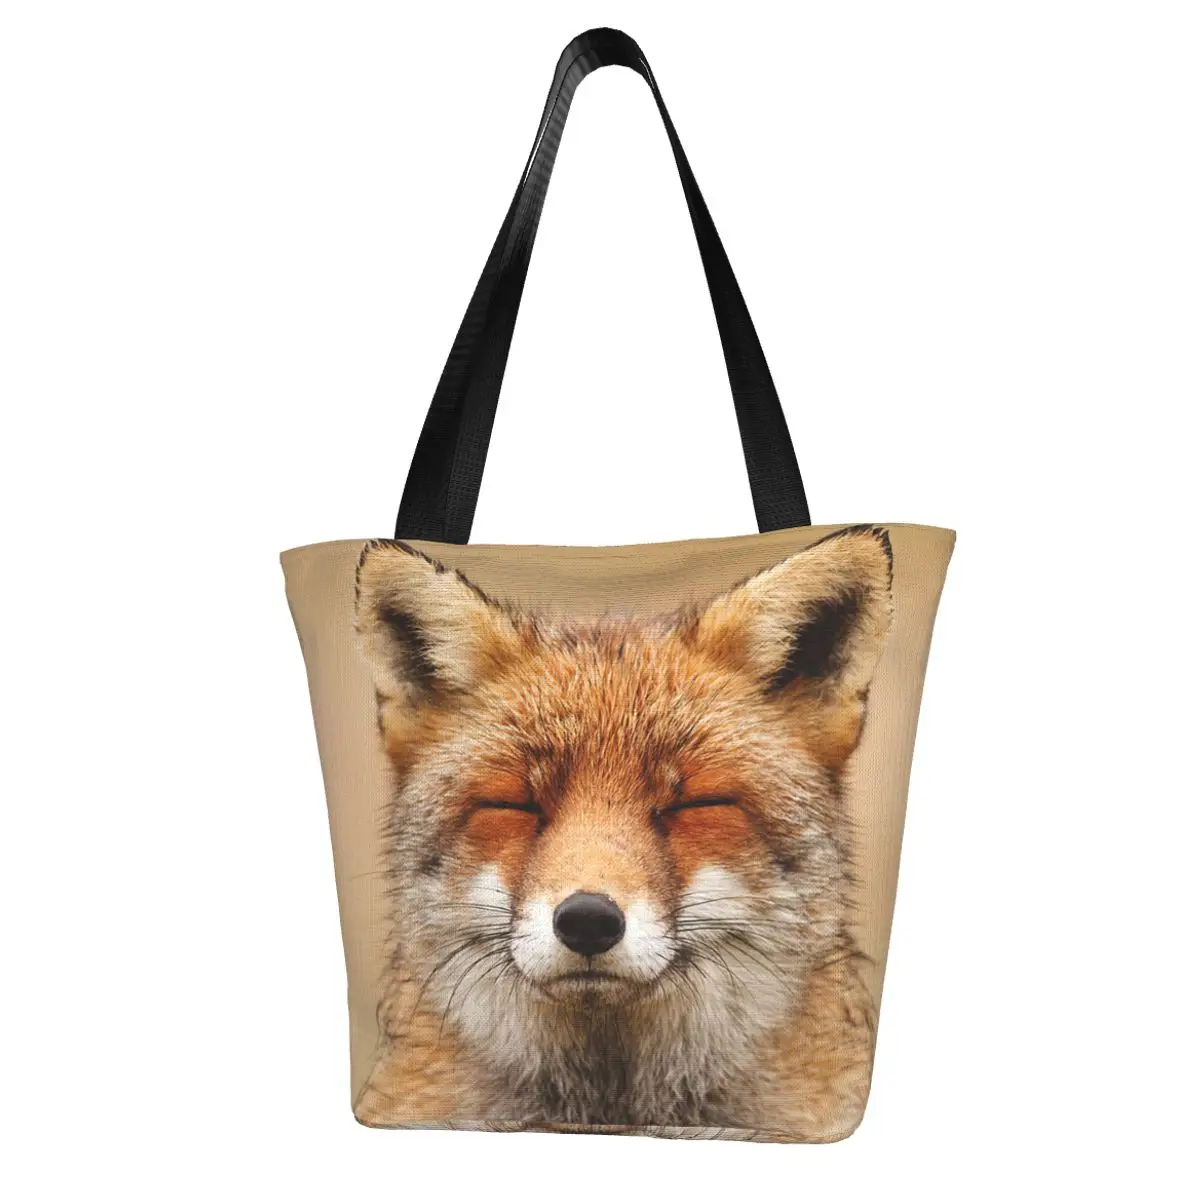 Zen Fox Red Fox Shopping Bag Aesthetic Cloth Outdoor Handbag Female Fashion Bags